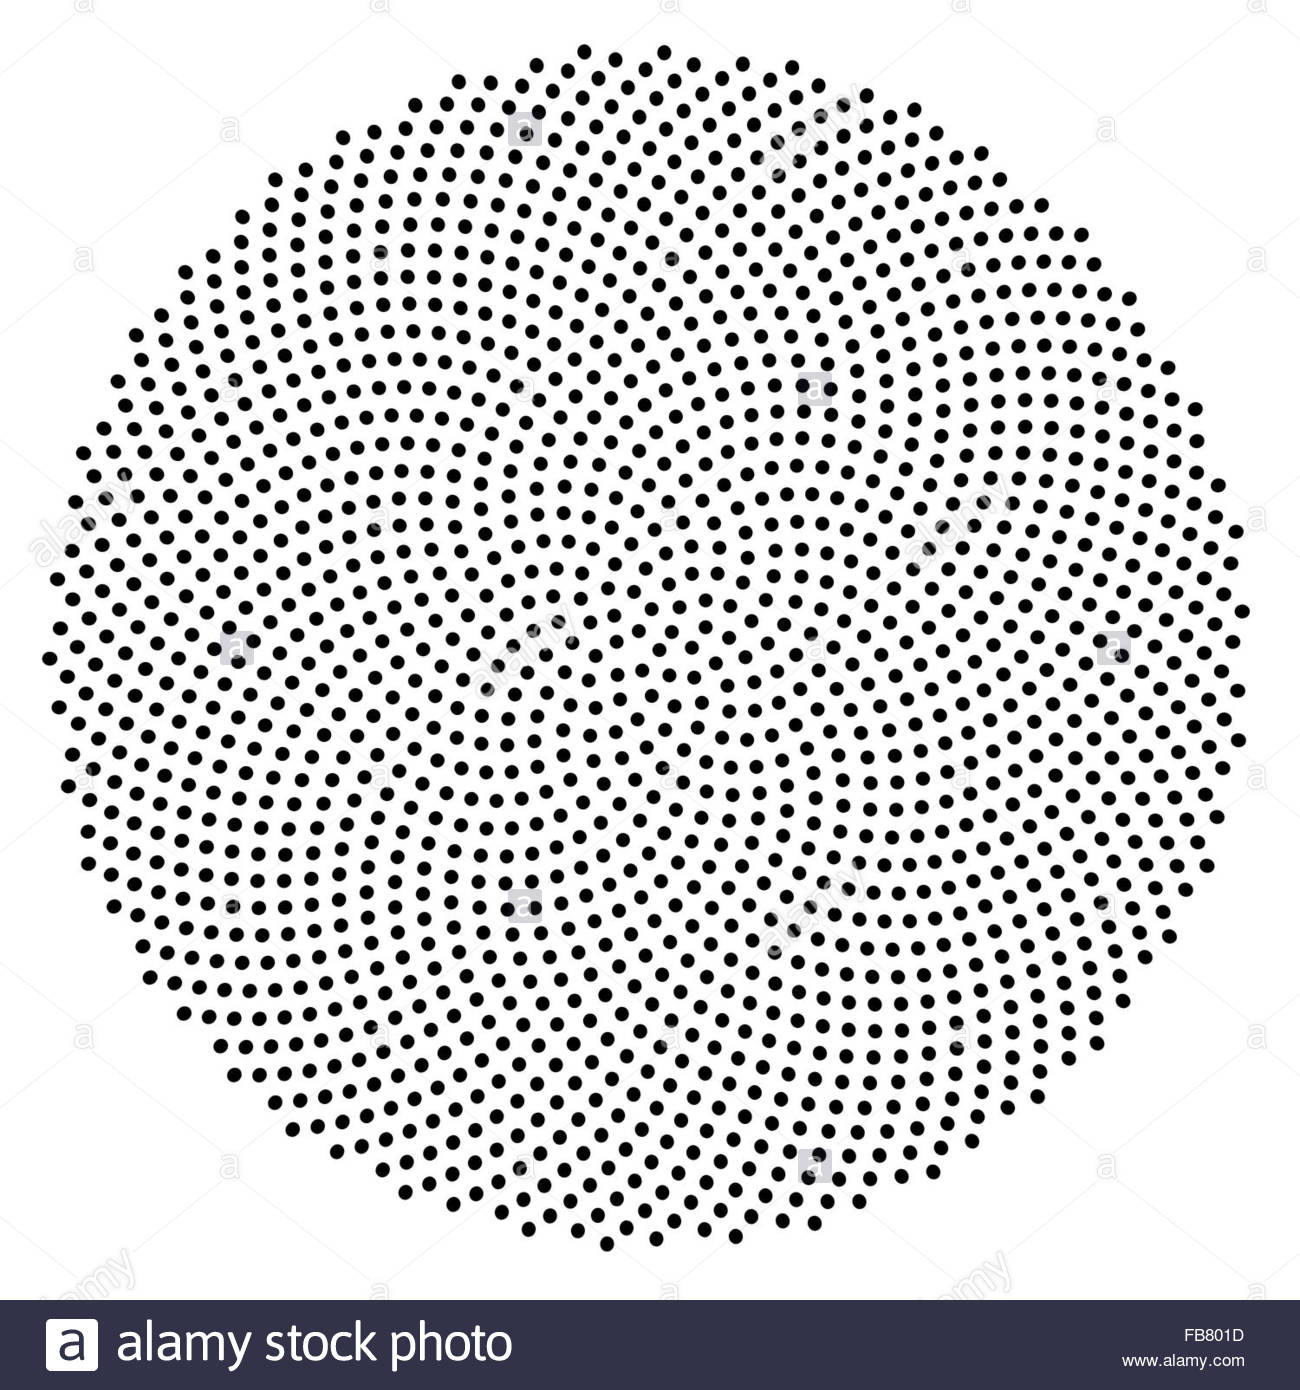 Royalty free clipart illustration of a black fibonacci golden ratio mathematics dot pattern, on a white background.